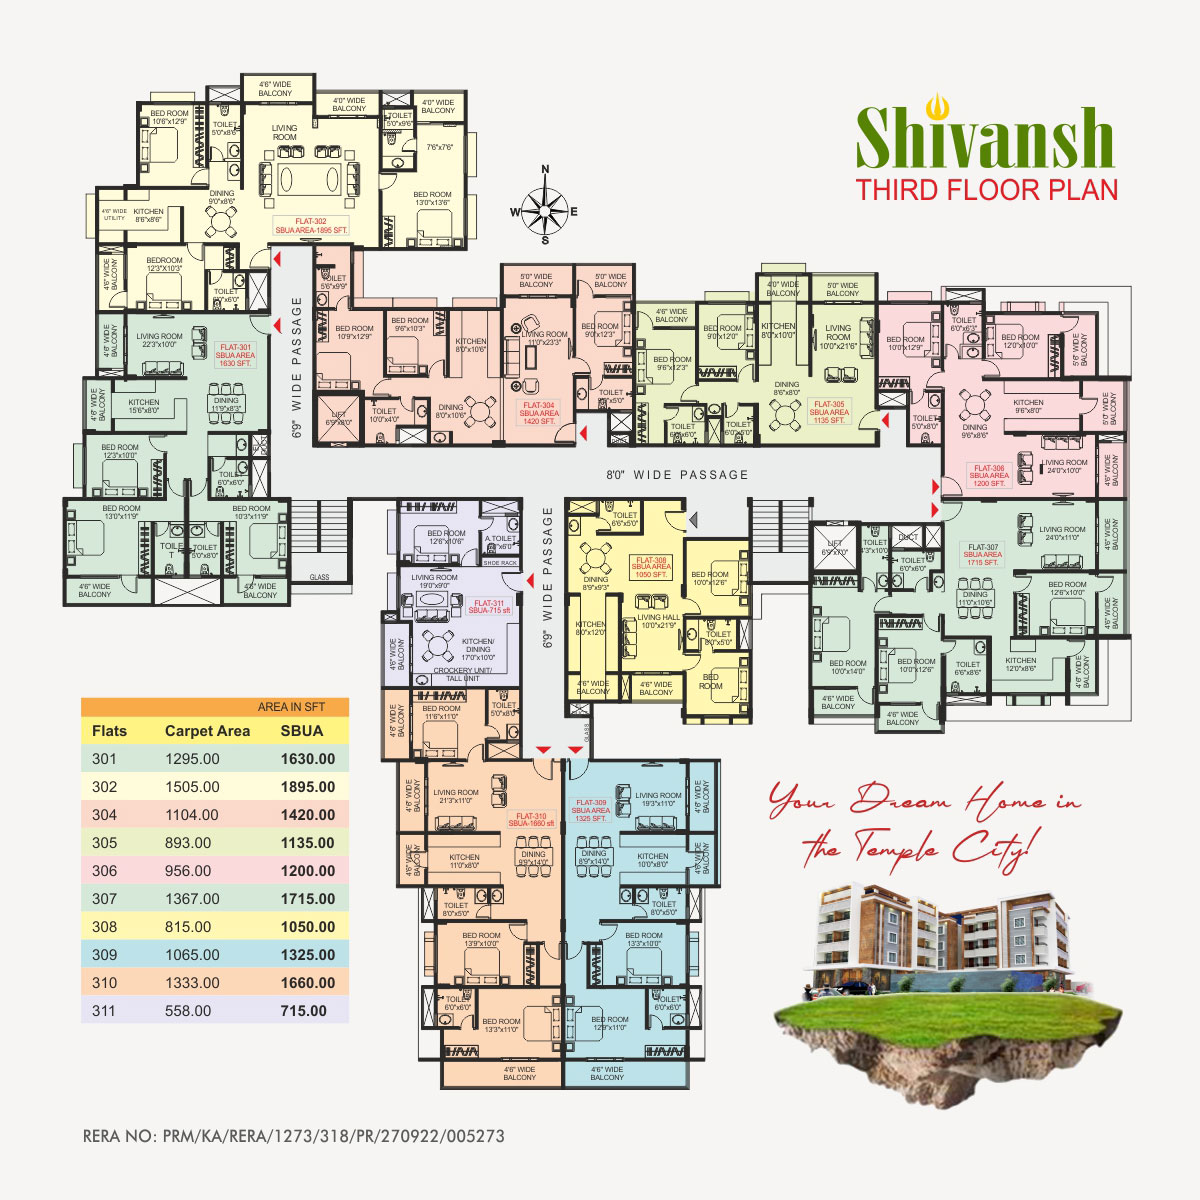 Shivansh Udupi Third Floor Plan